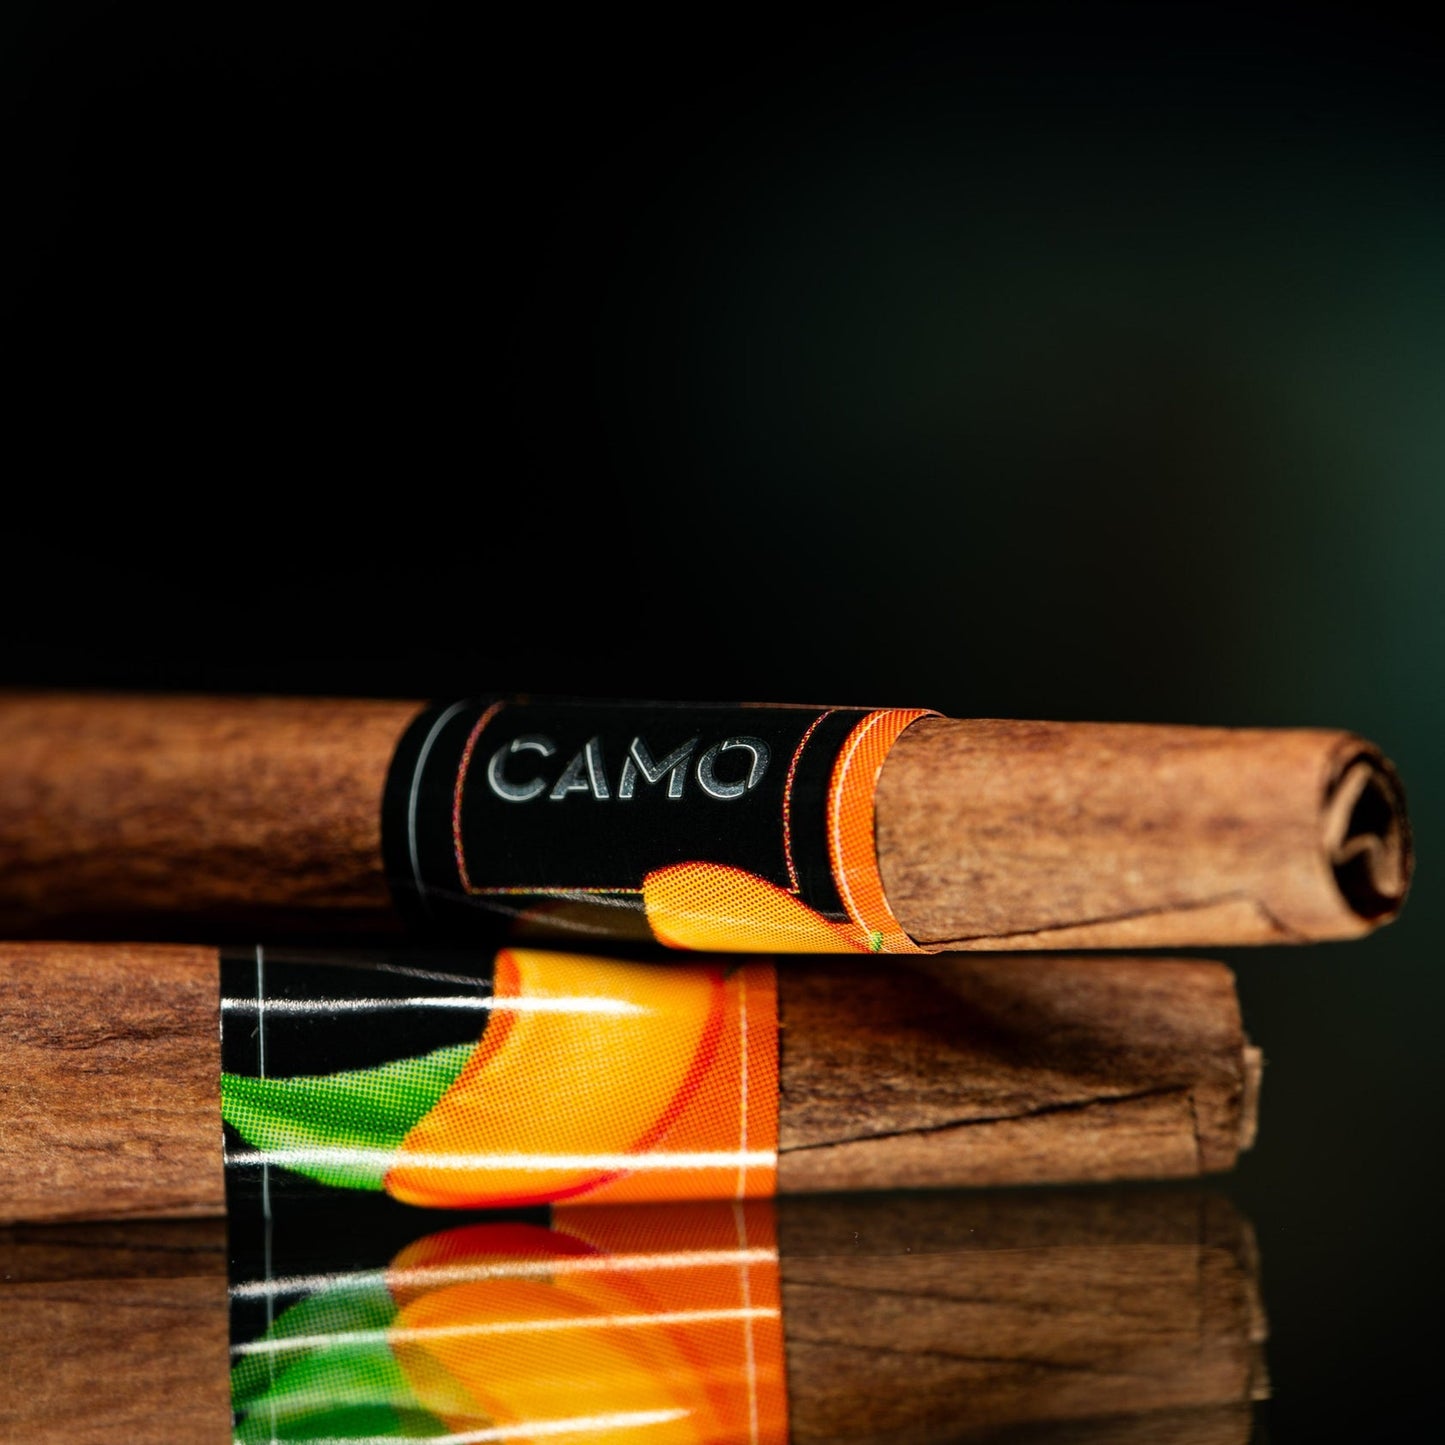 Camo Wrap King Sized Cones Box - 12 Packs Per Box